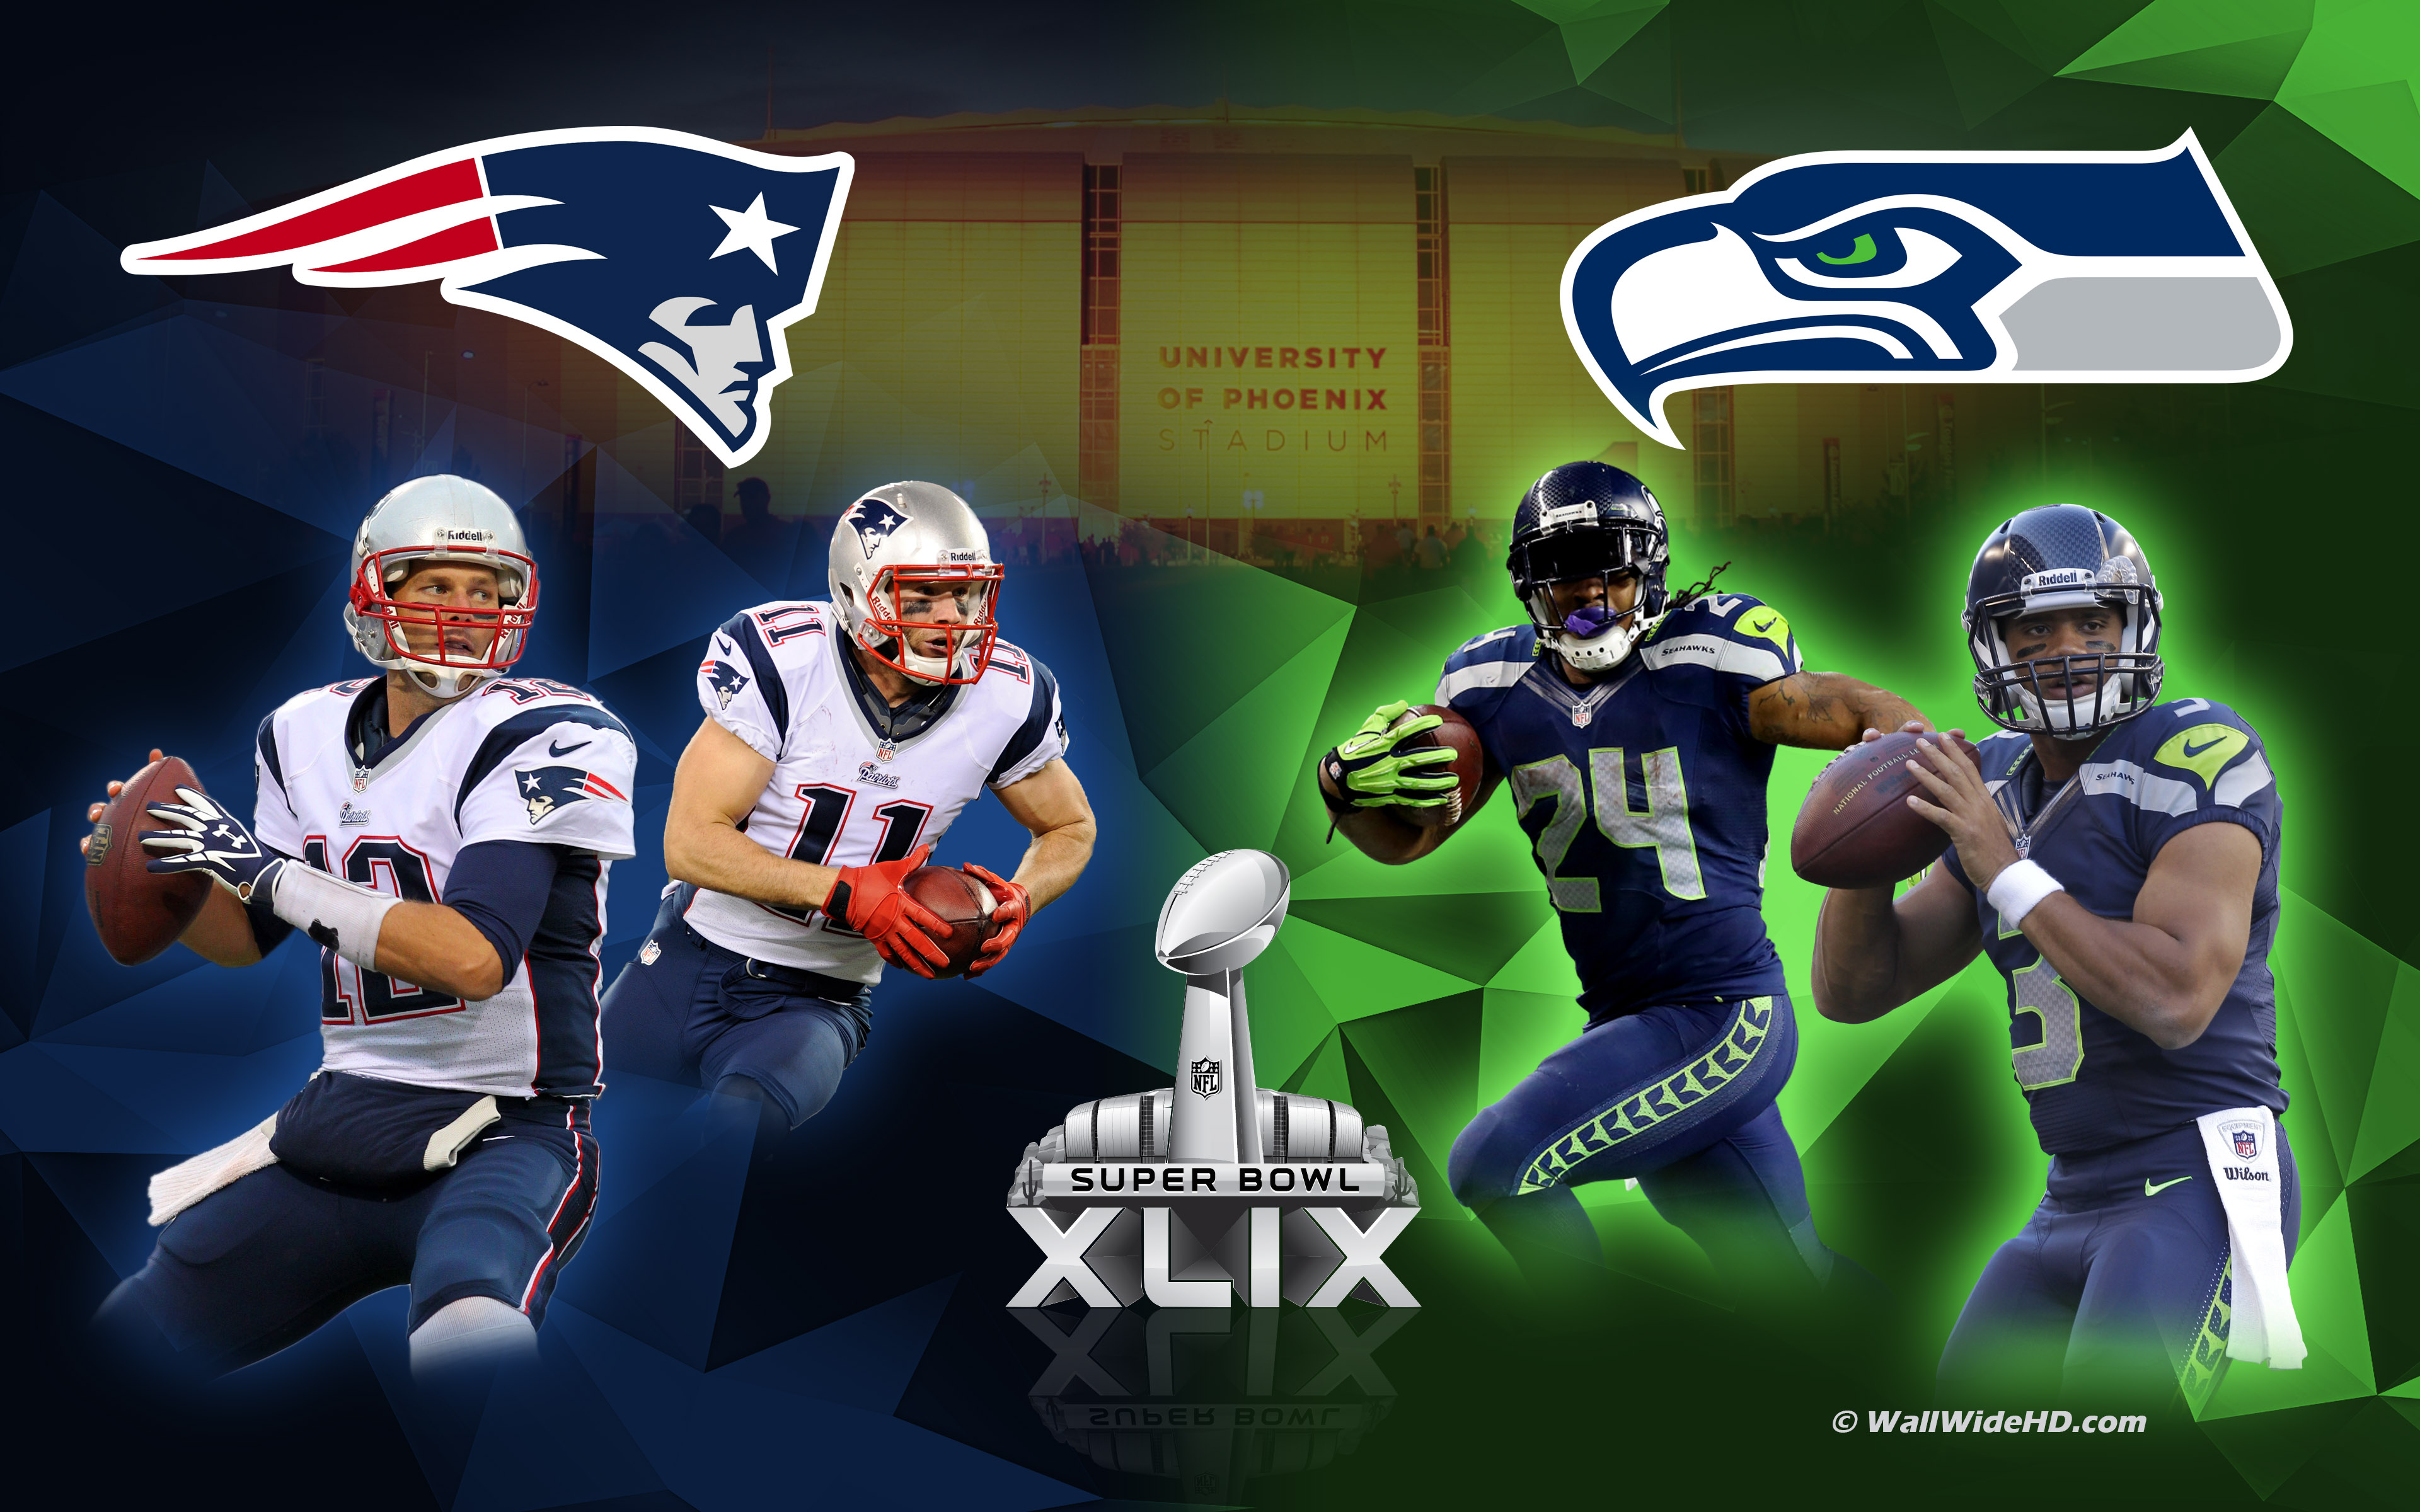 Tom Brady New England Patriots Autographed Super Bowl XLIX Pro